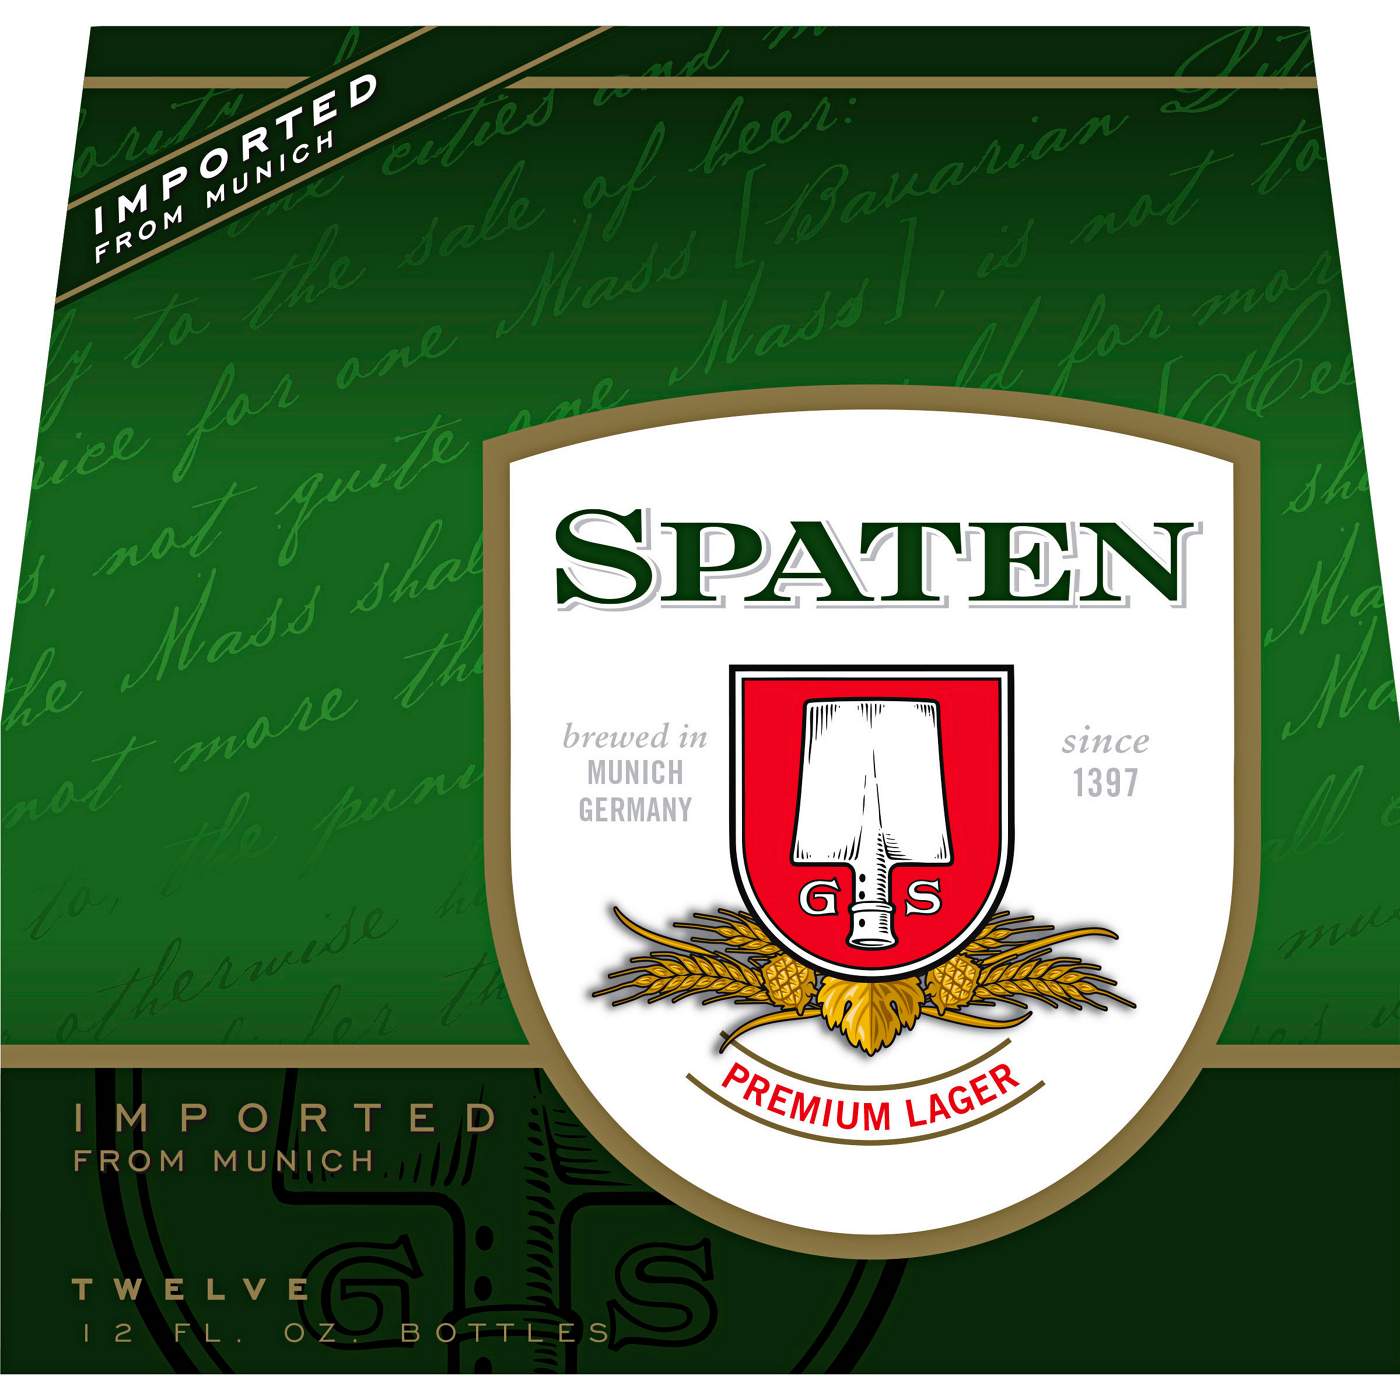 Spaten Premium Lager Beer 12 pk Bottles; image 2 of 2